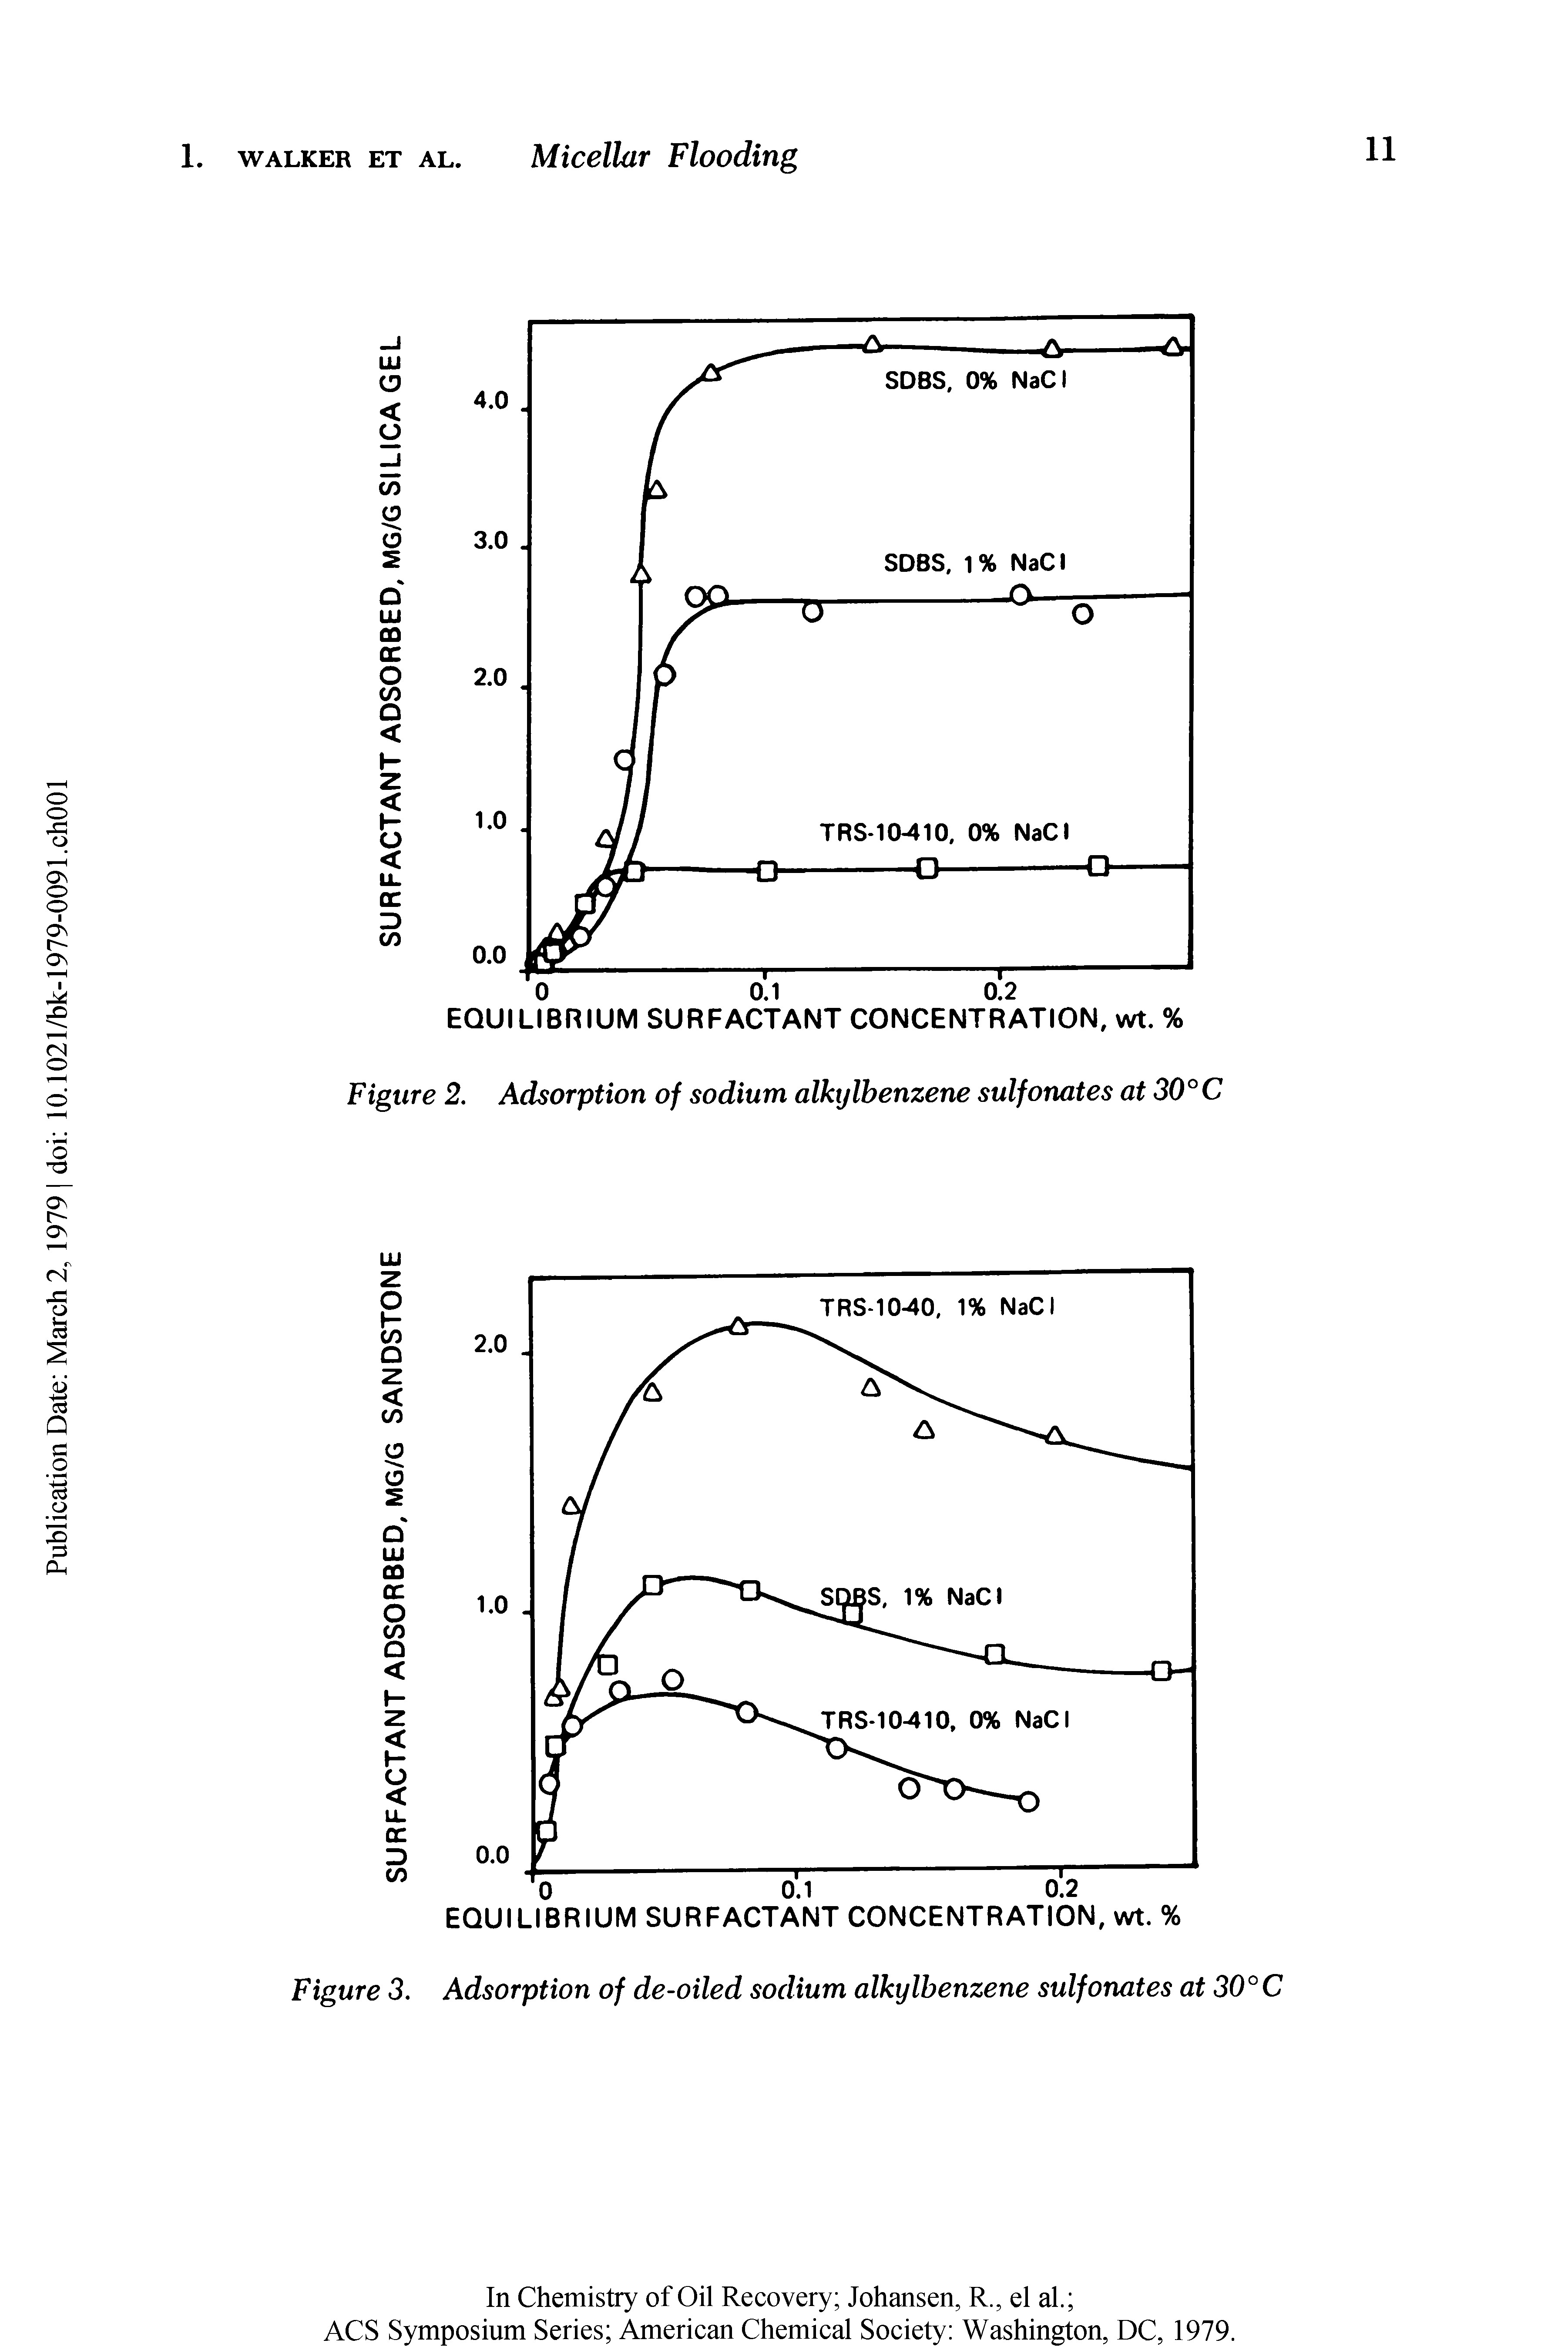 Figure 3. Adsorption of de-oiled sodium alkylbenzene sulfonates at 30°C...